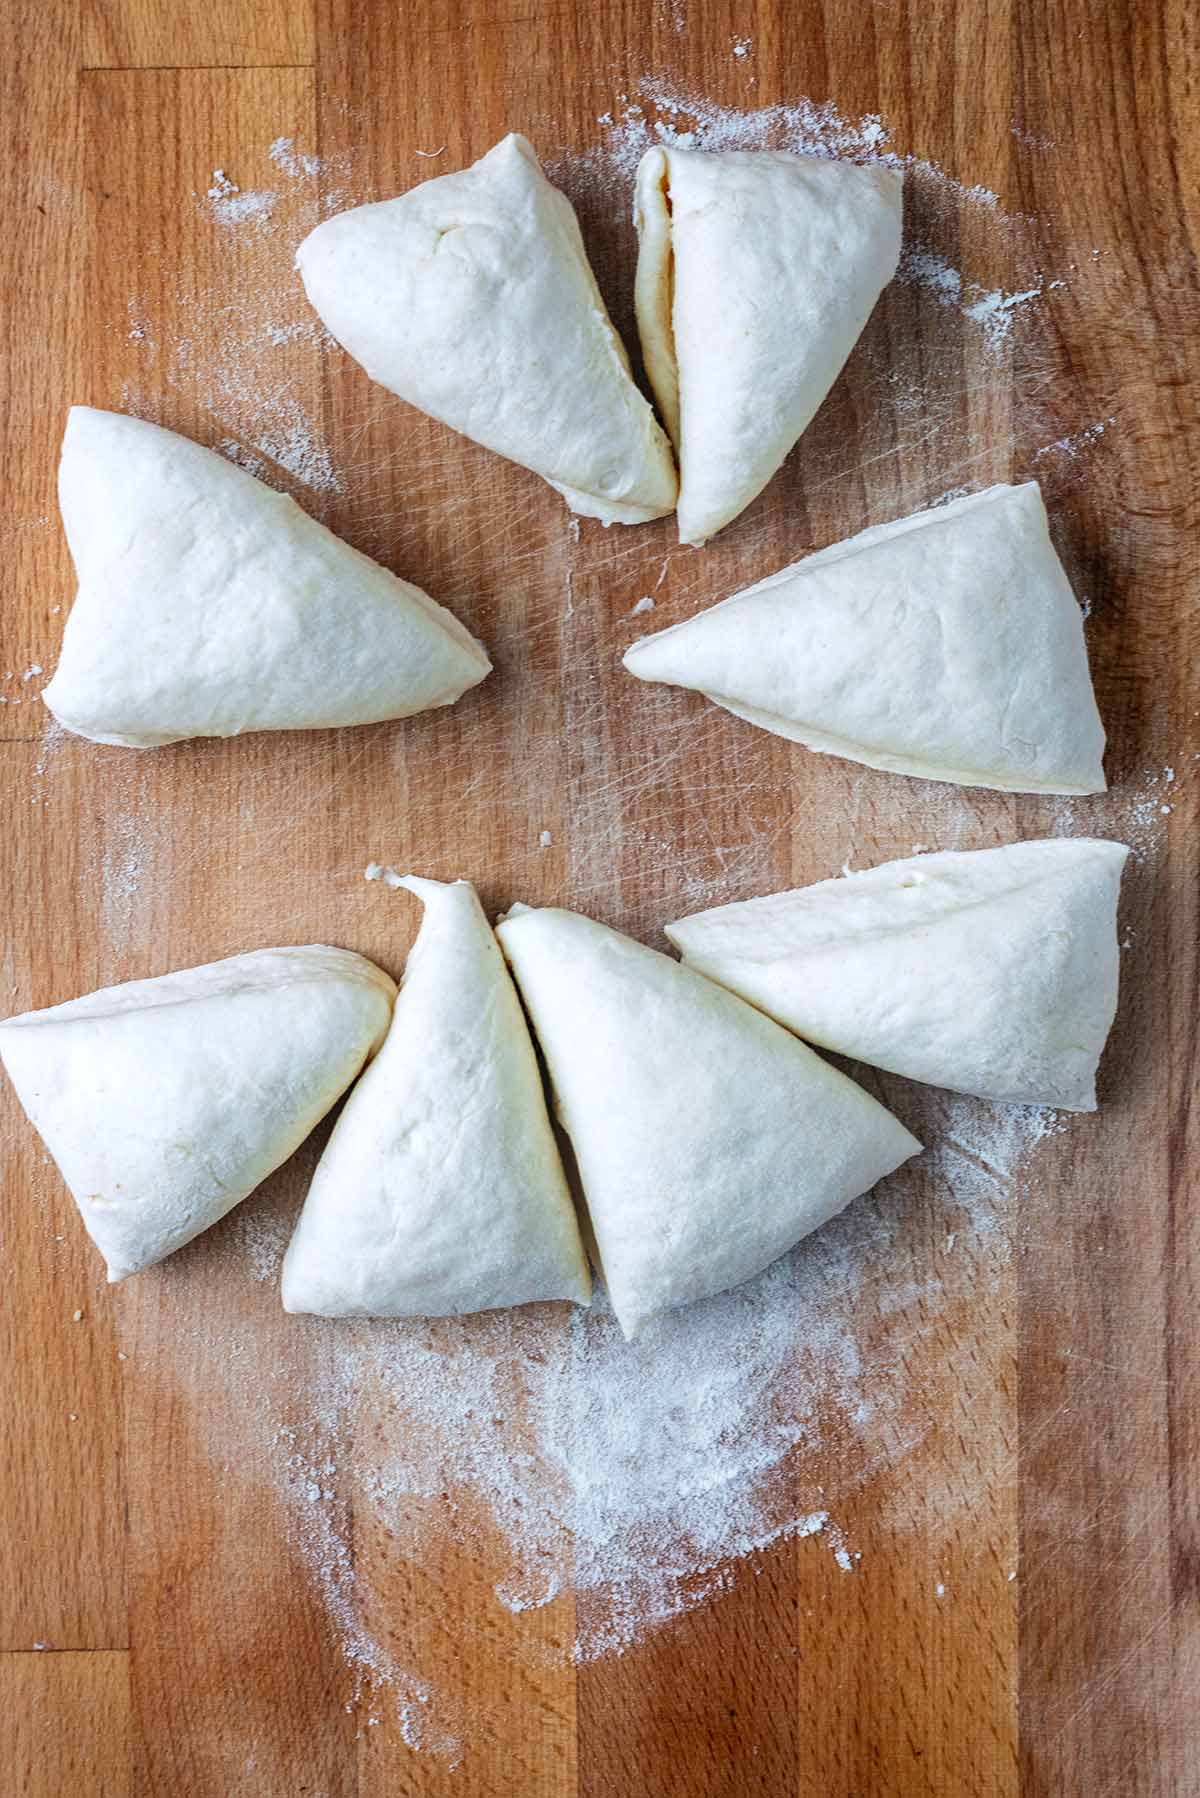 Bread dough cut into eight triangular pieces.